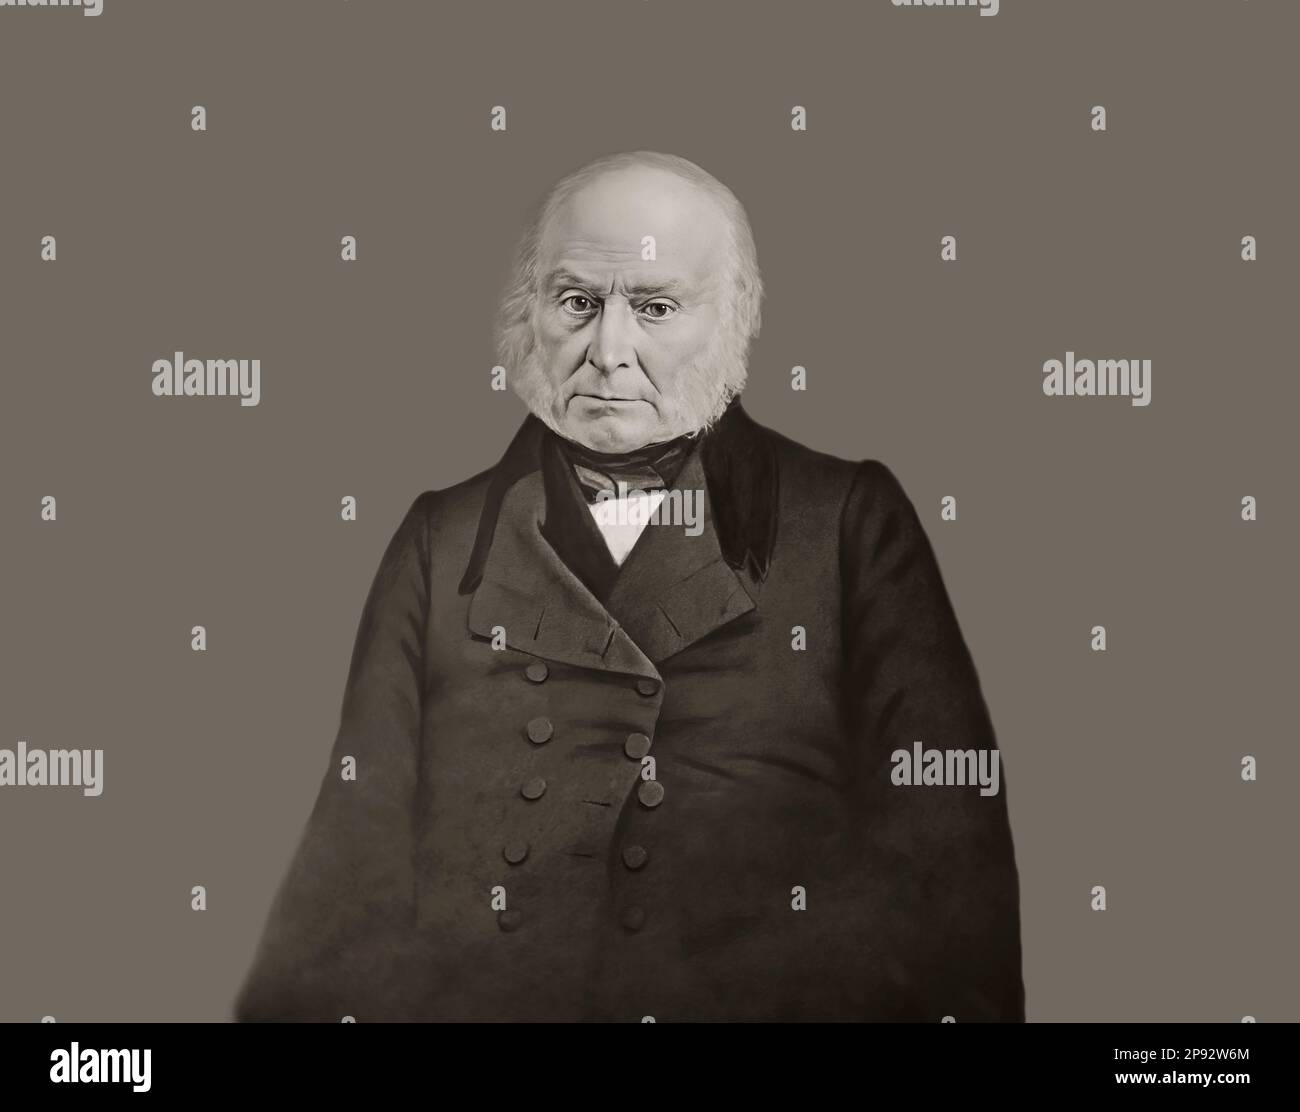 John Quincy Adams, 1767-1848, 6th president of the United States, portrait photo by Mathew B. Brady, digitally restored Stock Photo